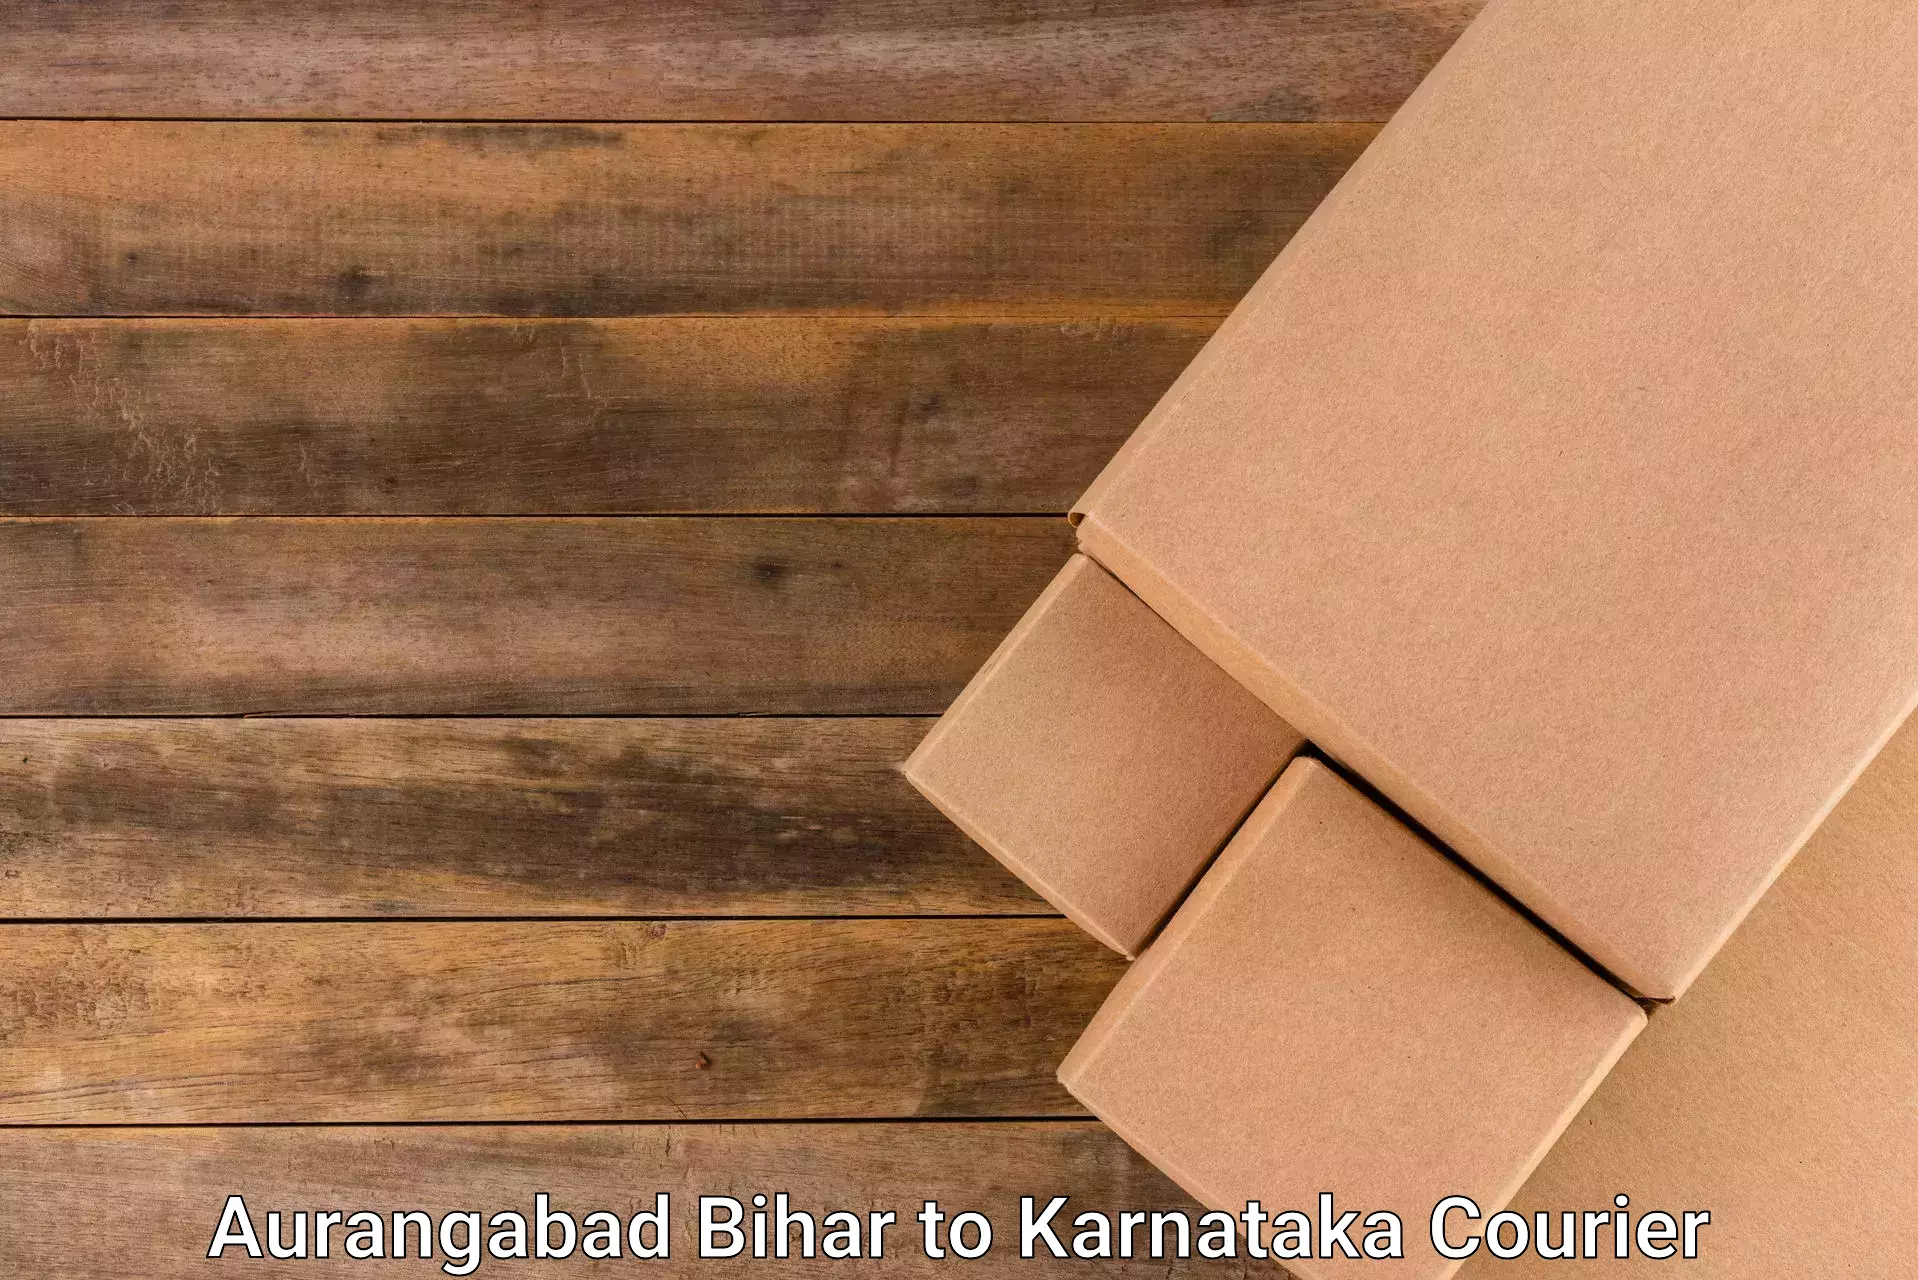 Efficient cargo services Aurangabad Bihar to Mysore